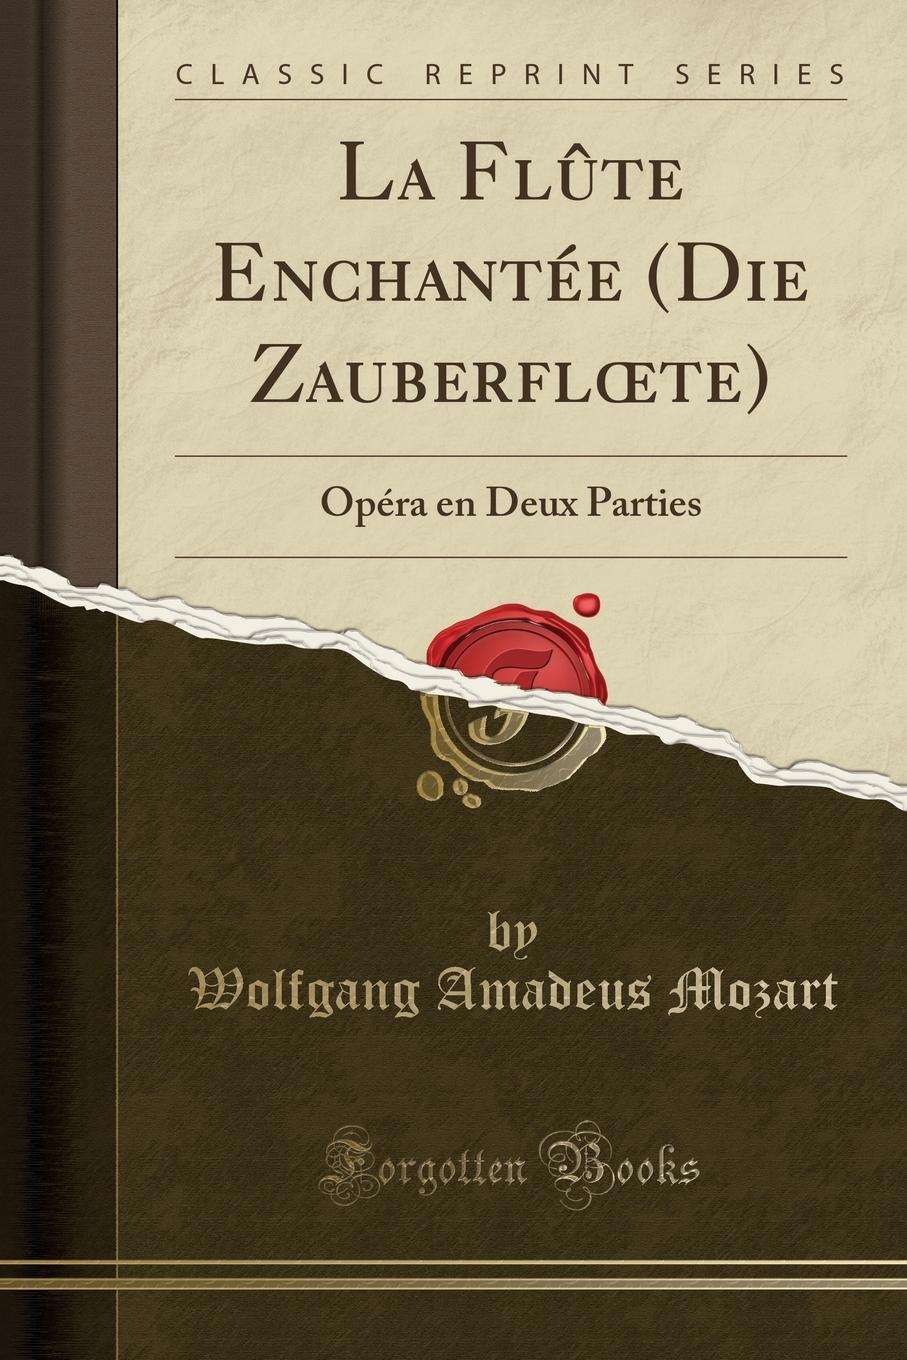 La Flute Enchantee (Die Zauberfloete). Opera en Deux Parties (Classic Reprint)